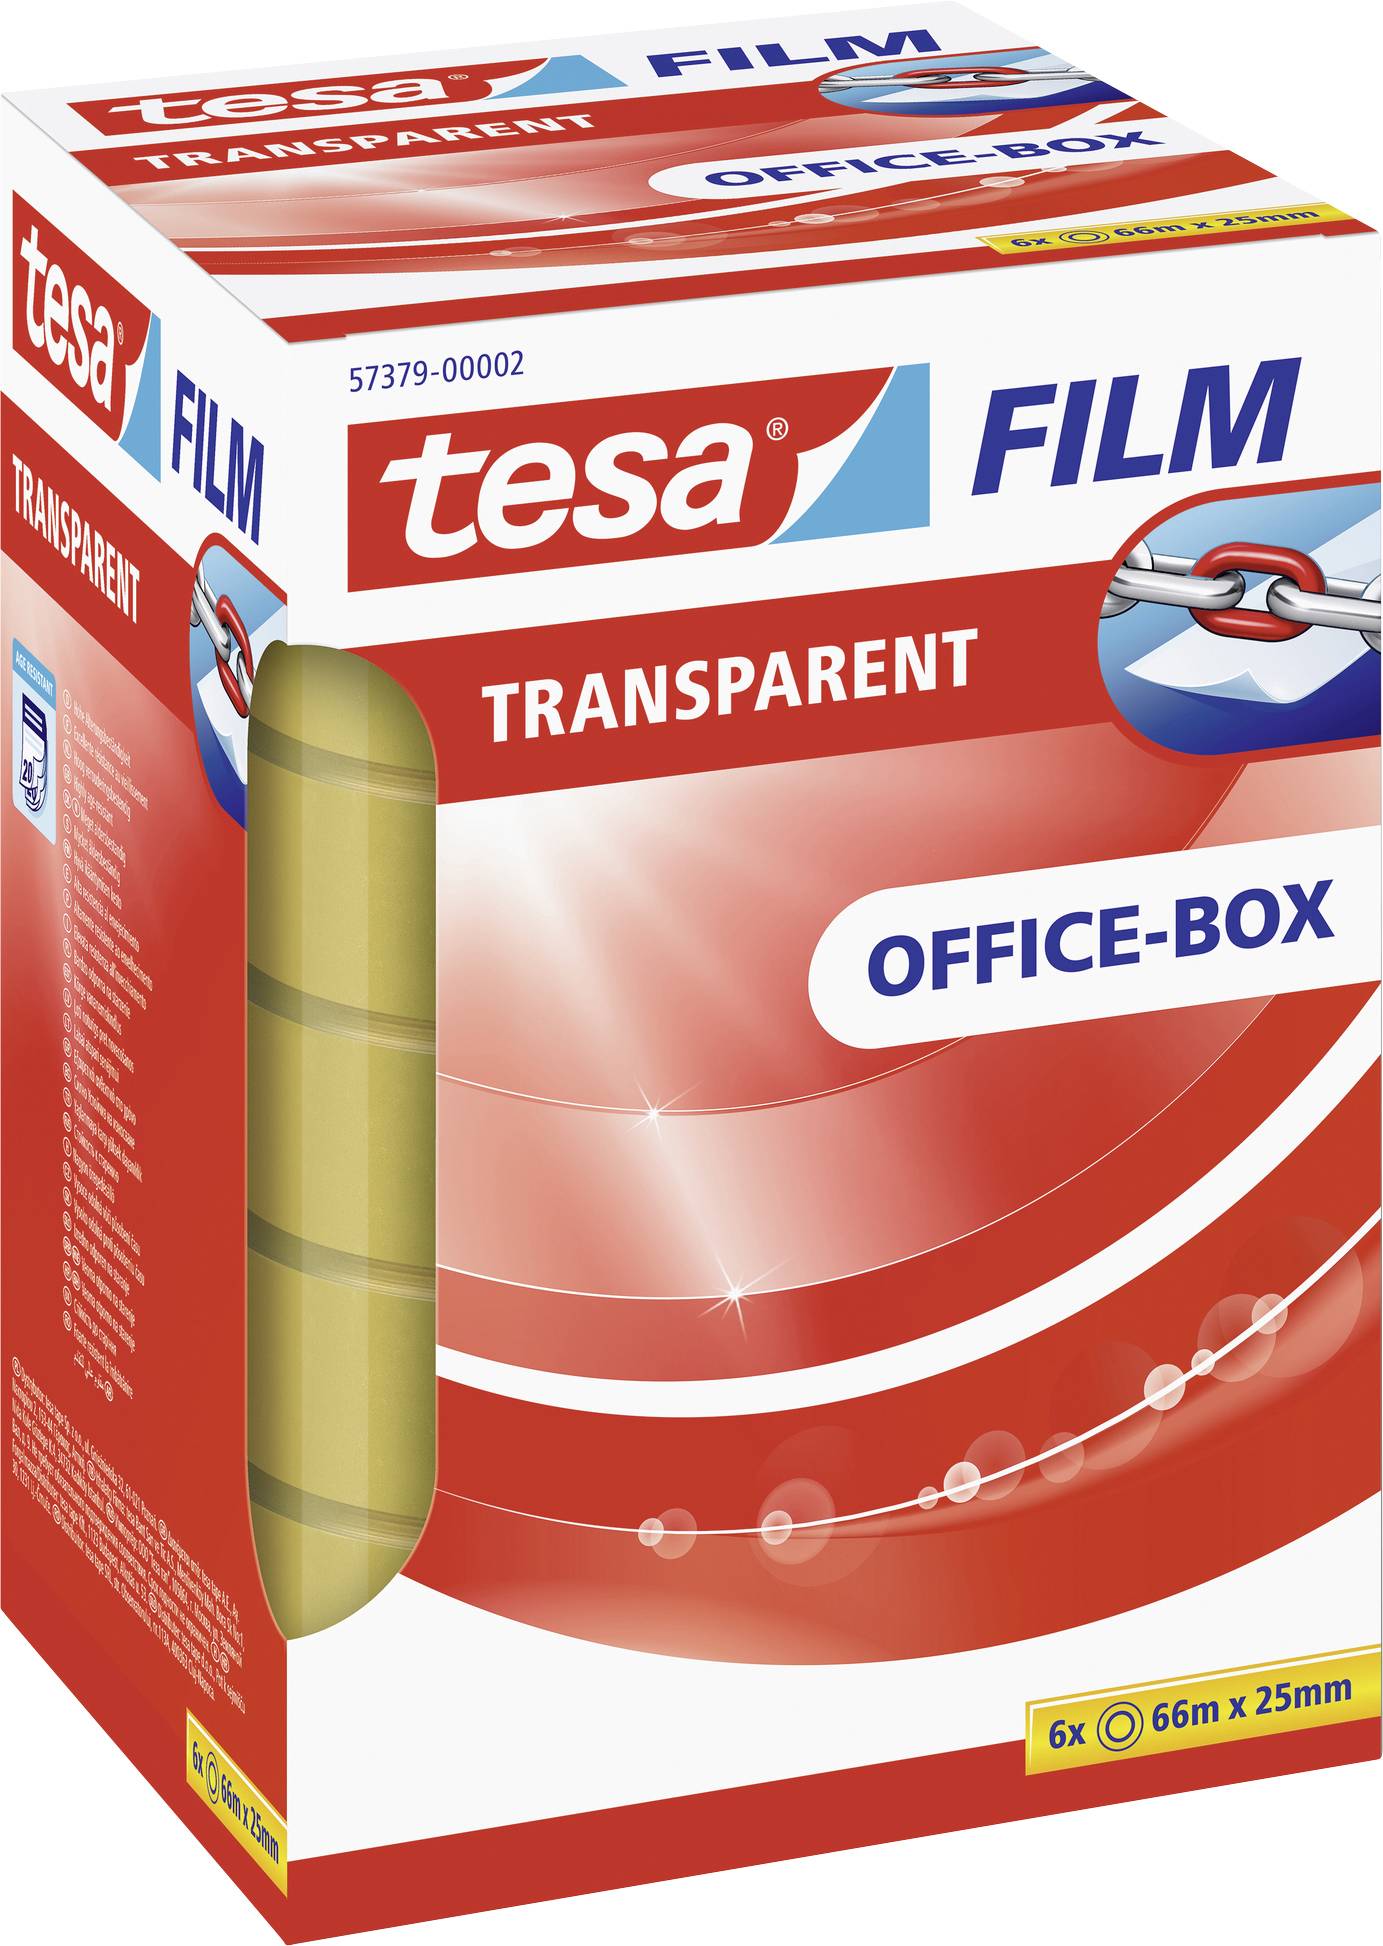 57379-00002 tesa® Klebefilm Box 66mx25mm transparent 6 Stück Office Box 